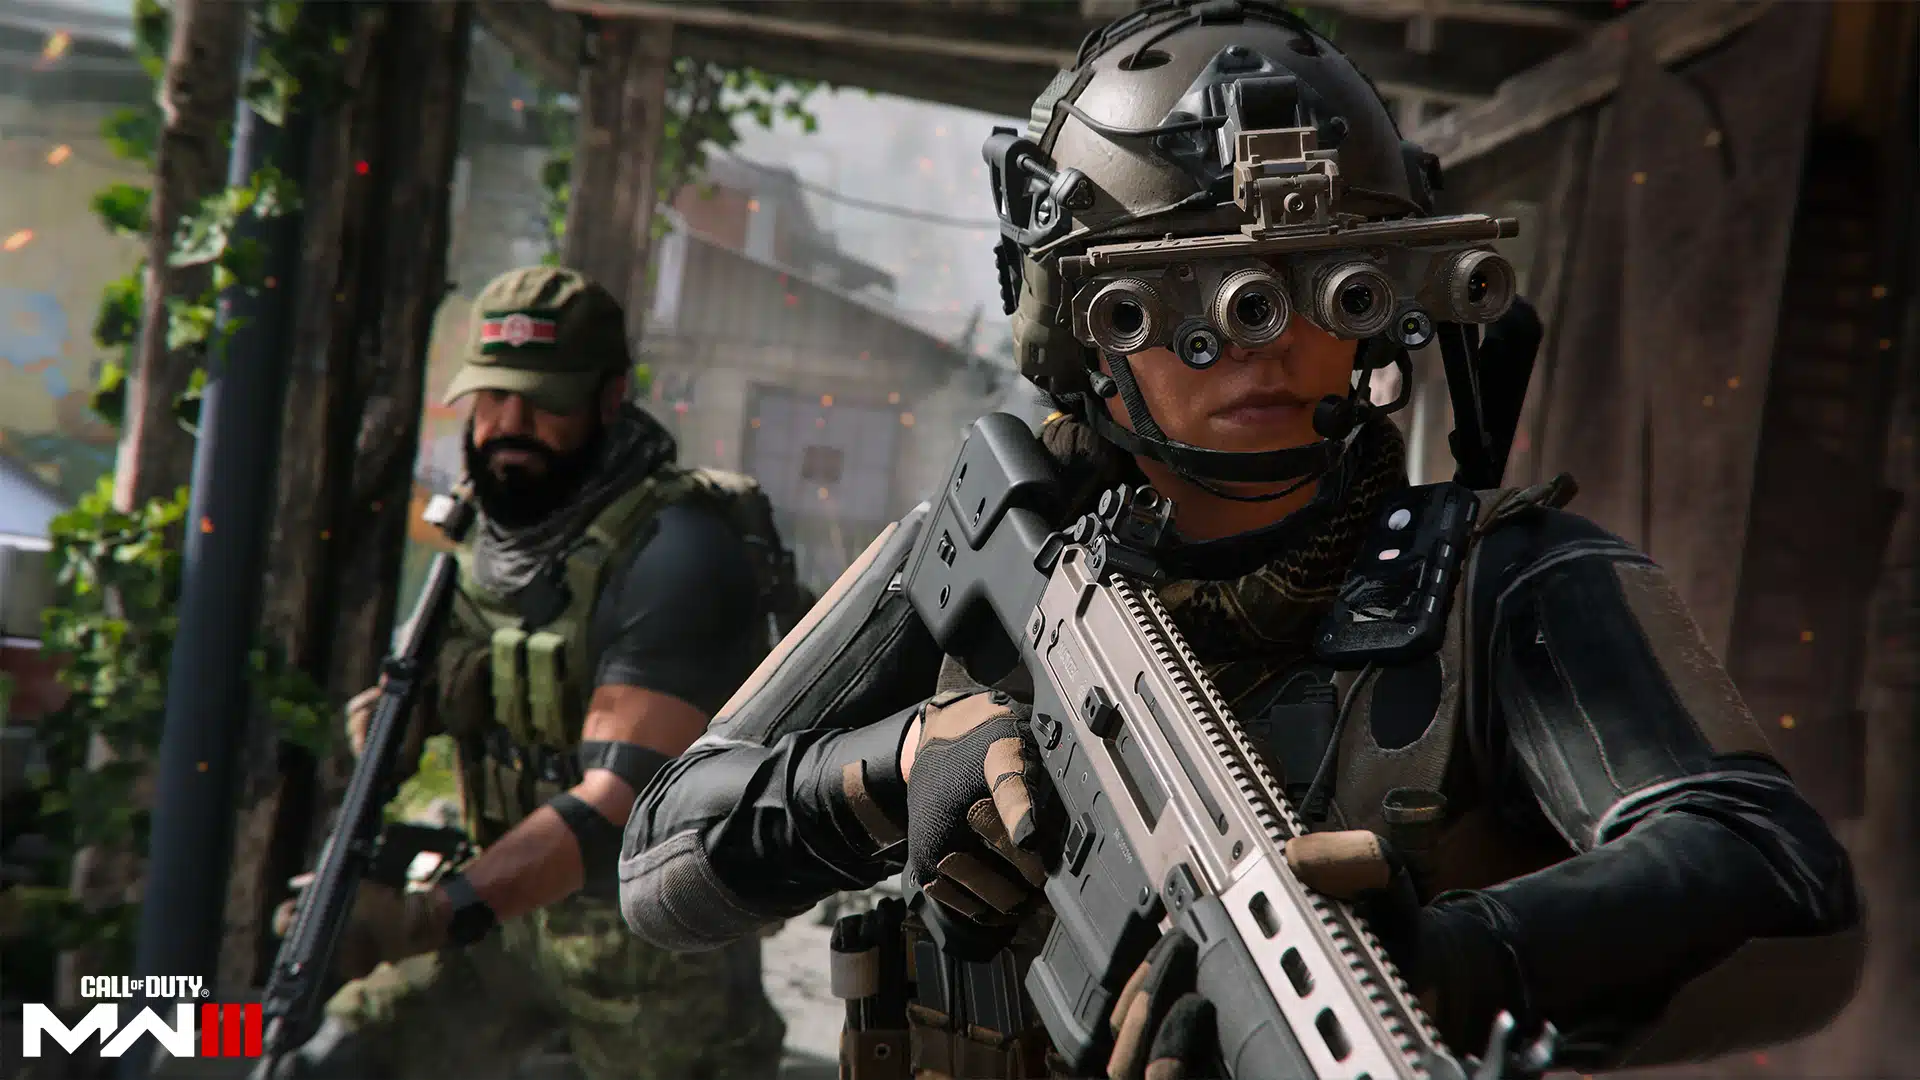 Call of Duty: Modern Warfare 3 Update 1.33